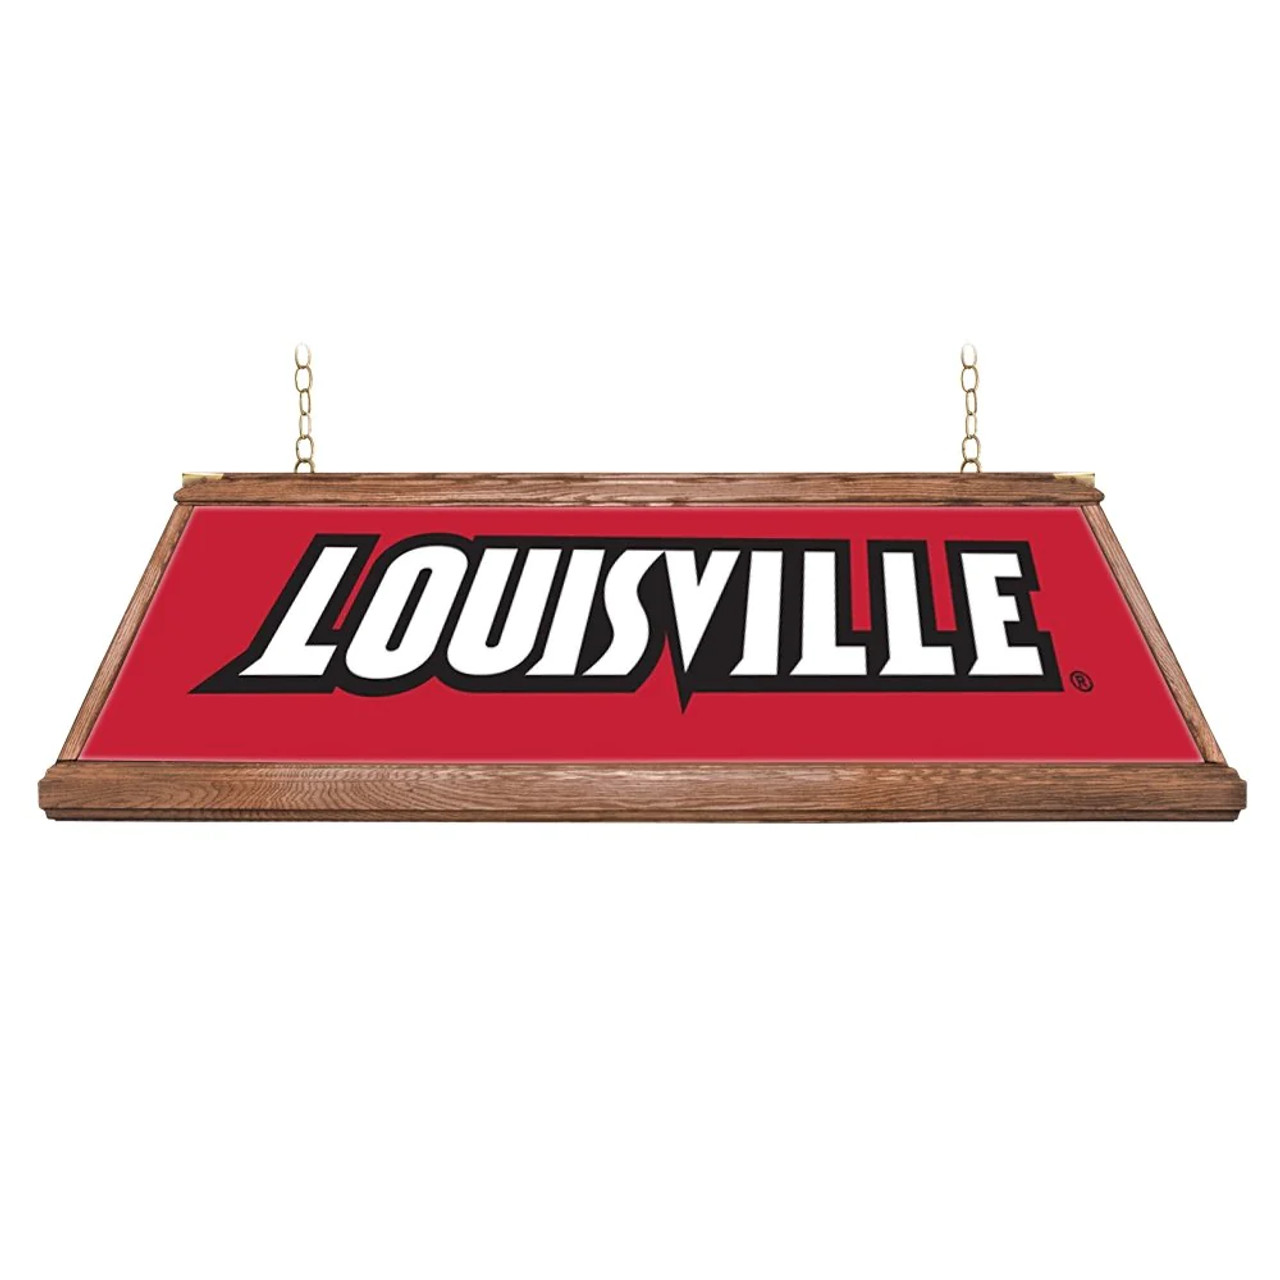 Louisville, Cardinals, Premium, Wood, Billiard, Pool, Table, Light, Lamp, NCLOUS-330-01A, NCLOUS-330-01B, The Fan-Brand, 687747755853